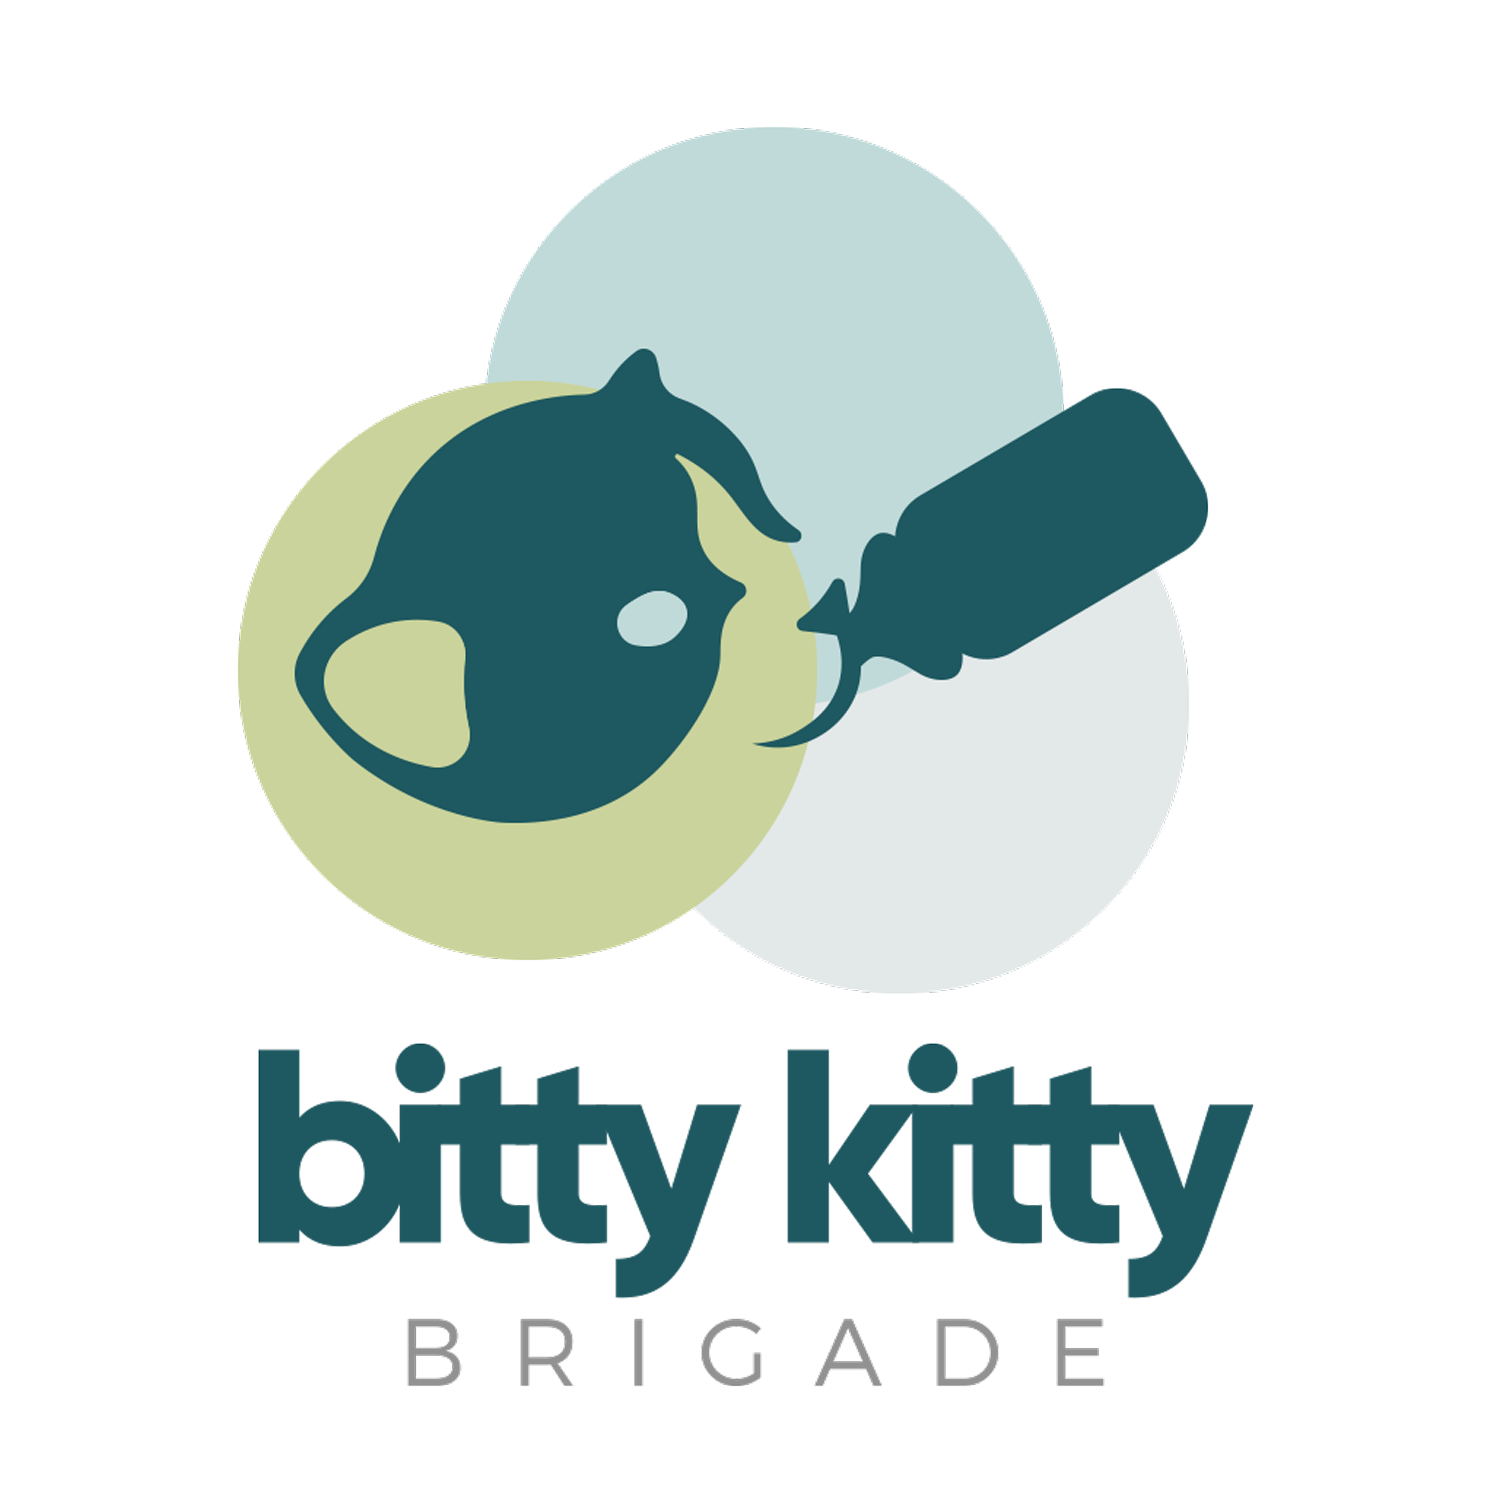 The Bitty Kitty Brigade